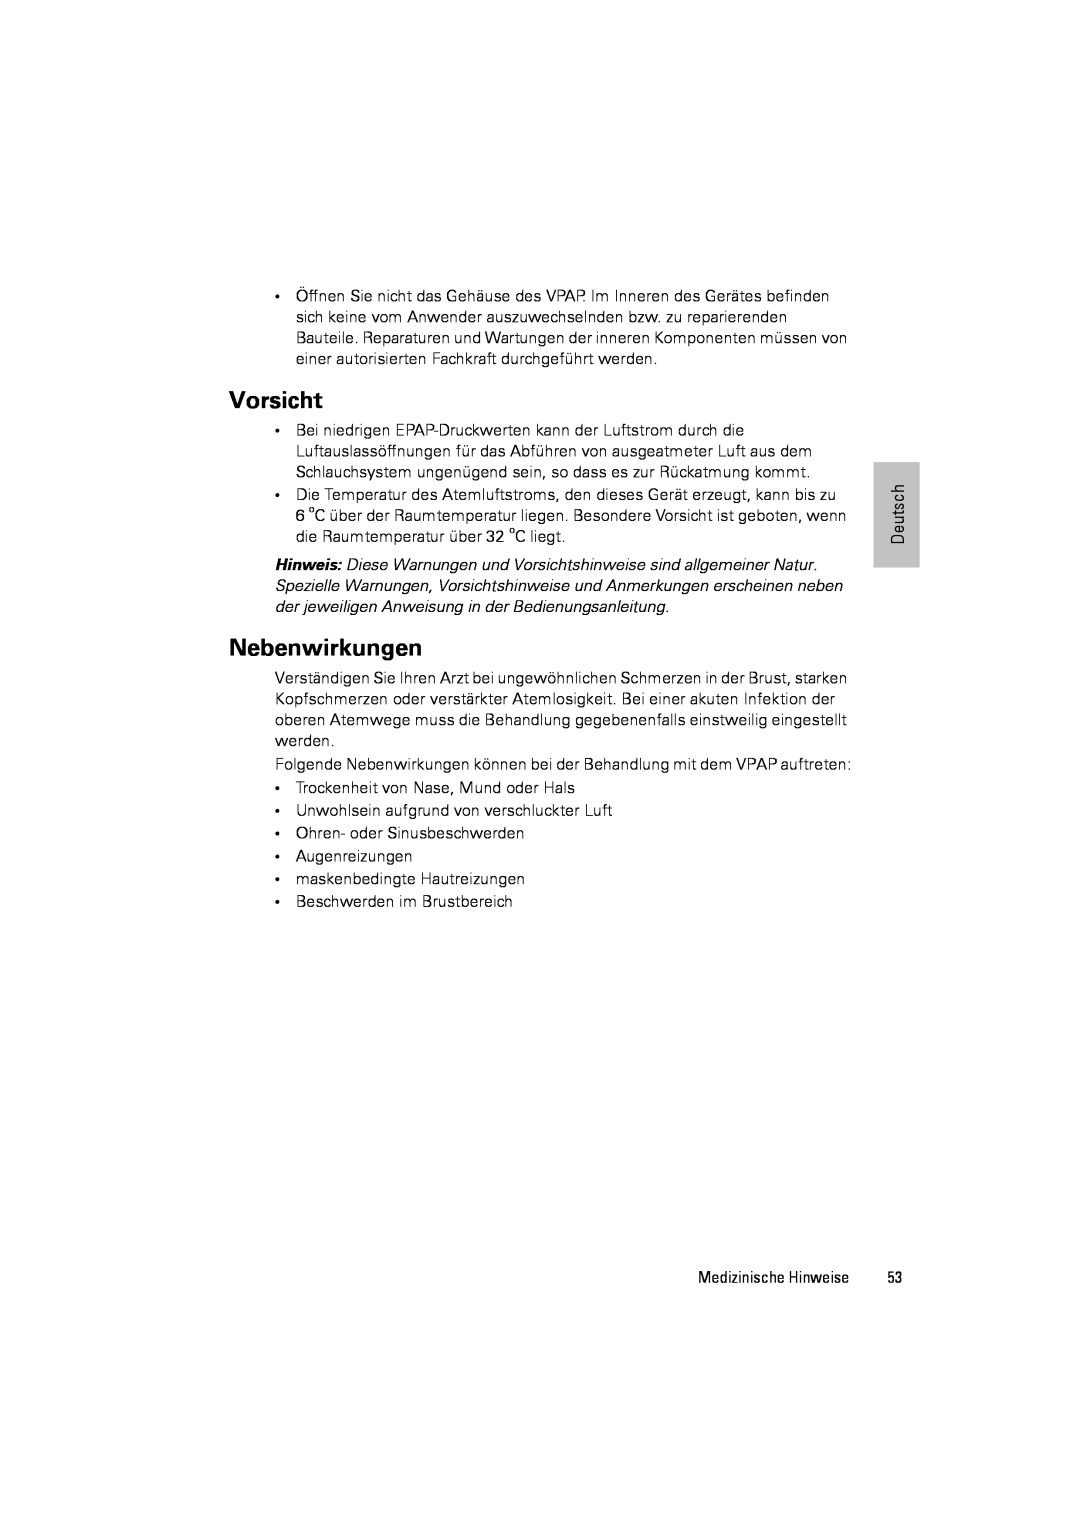 ResMed III & III ST user manual Vorsicht, Nebenwirkungen 